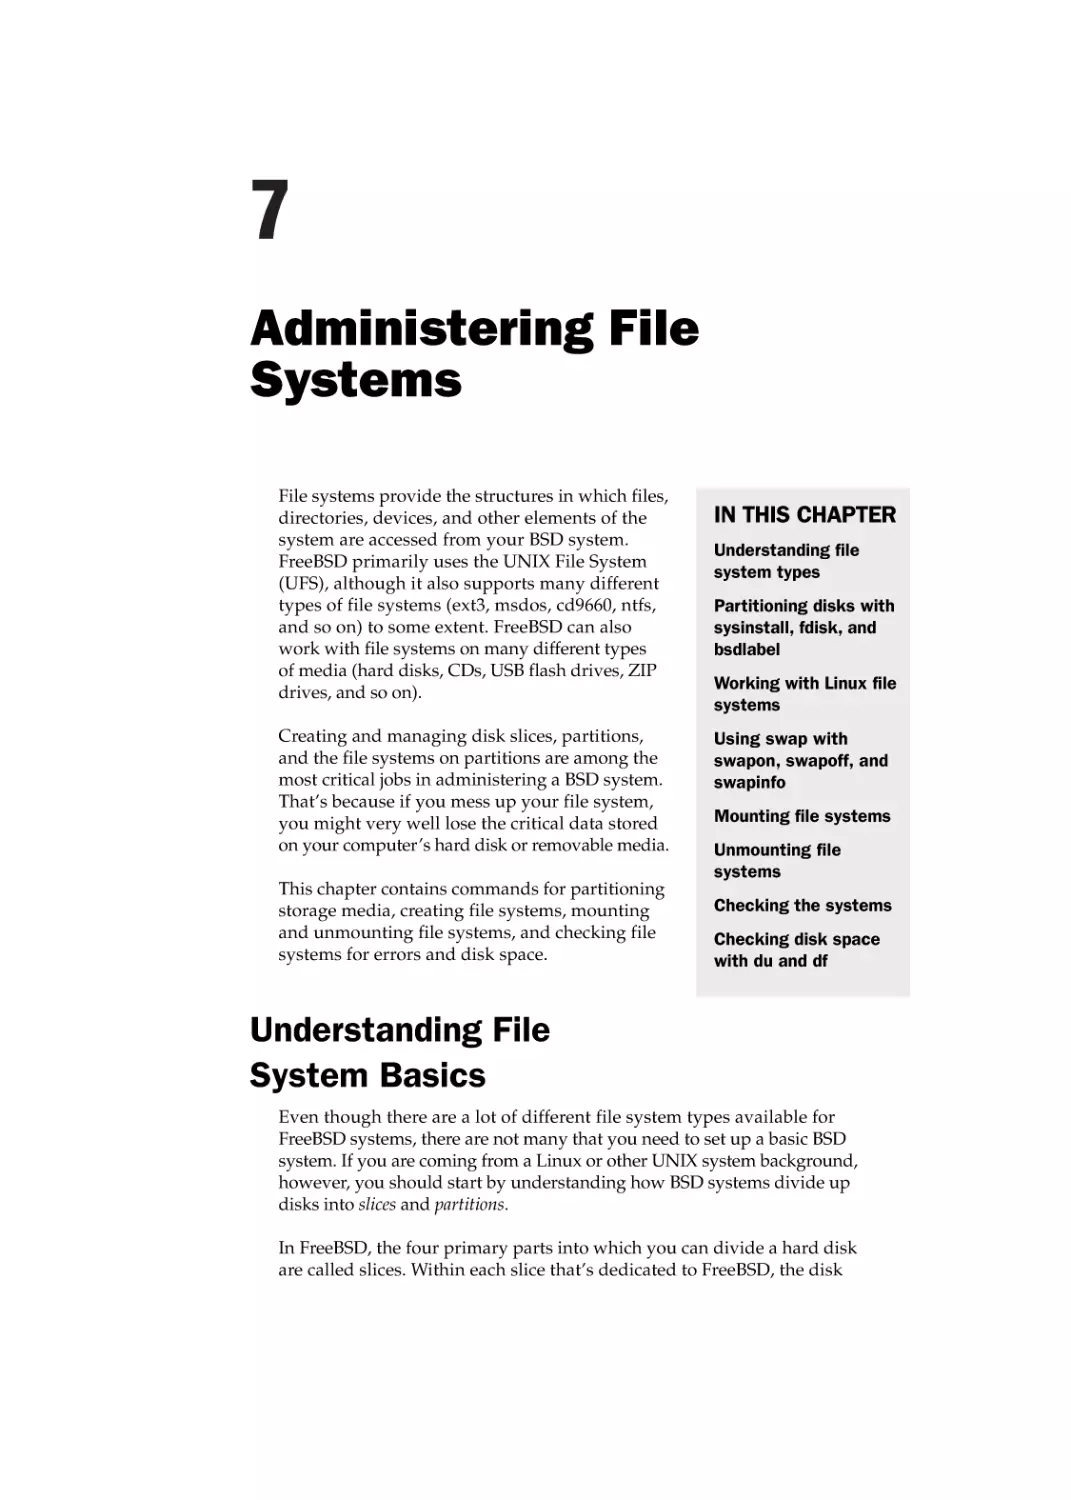 Chapter 7
Understanding File System Basics